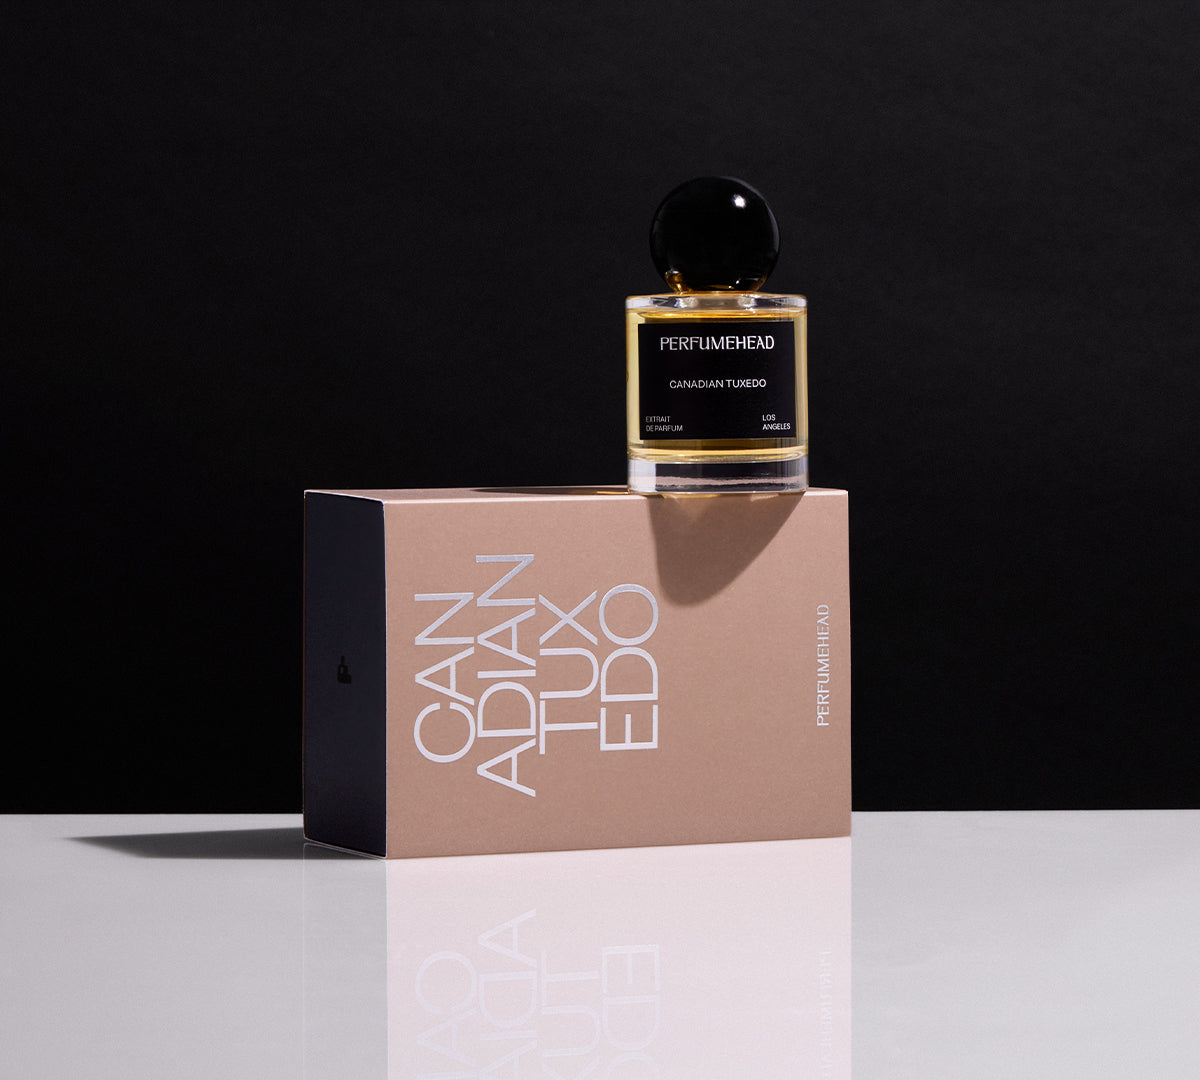 Canadian Tuxedo extrait de parfum 50ml signature spray bottle and box.